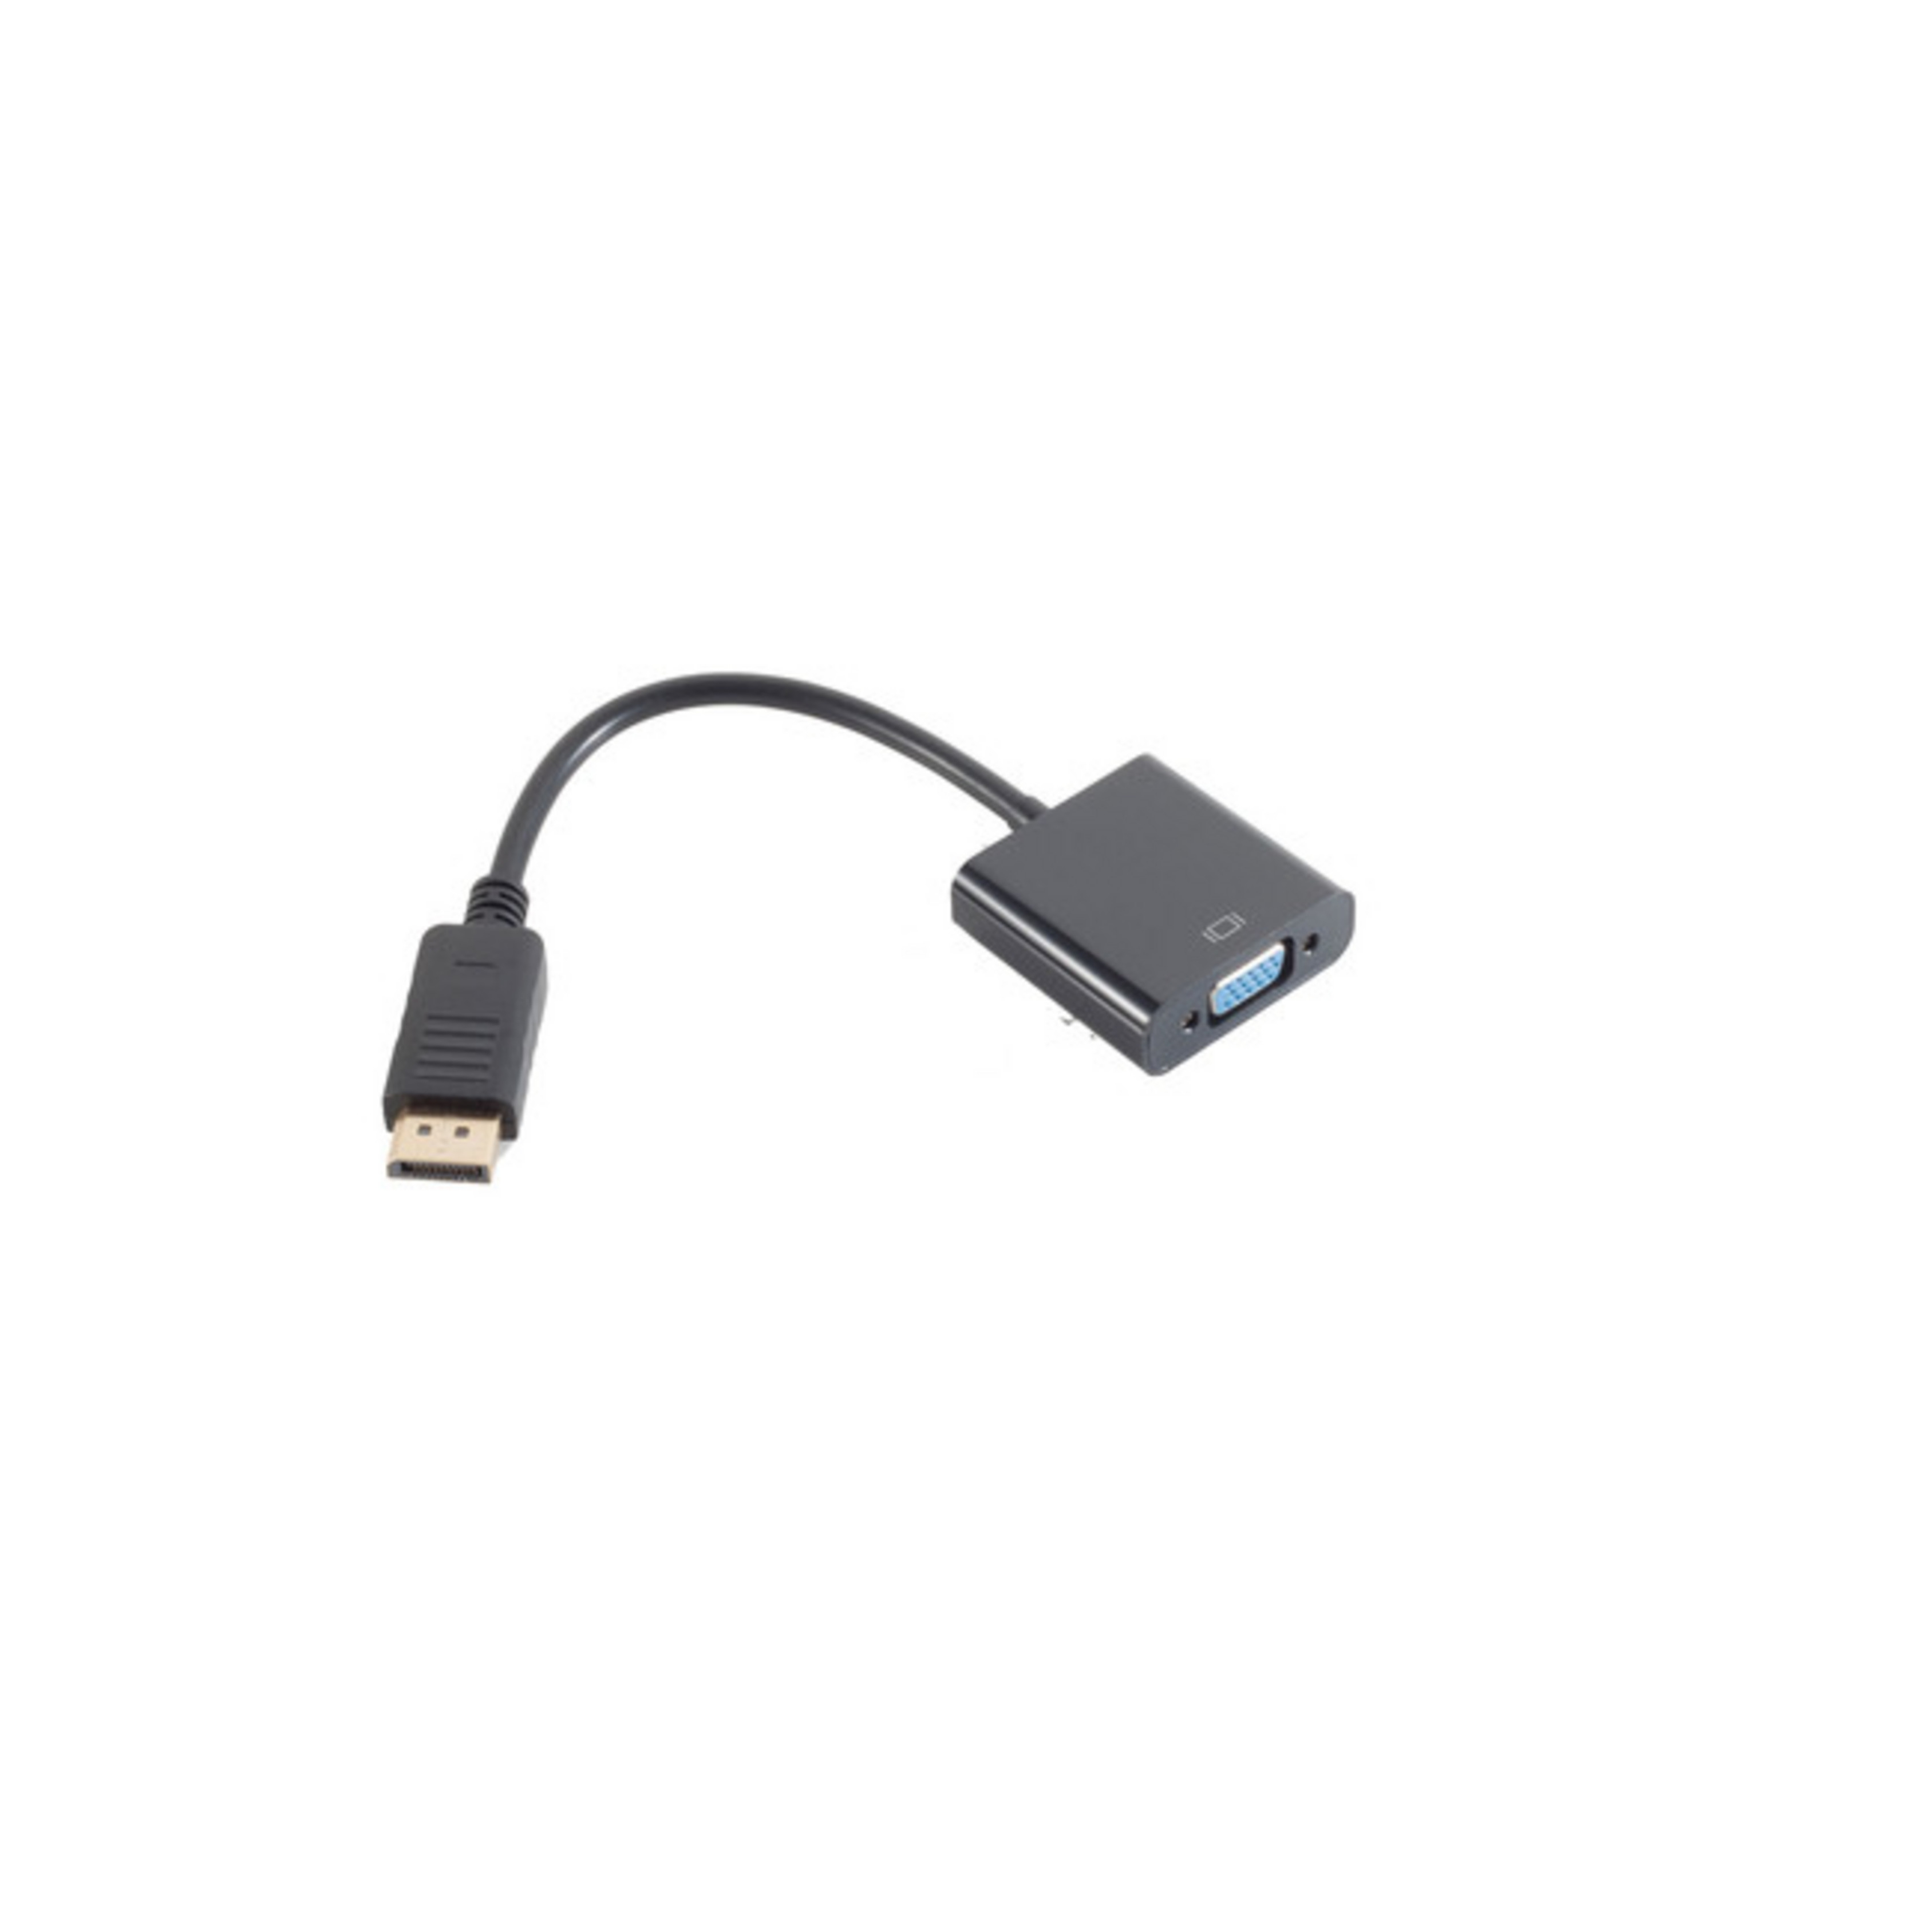 S/CONN MAXIMUM Adapter 1.2/ CONNECTIVITY DisplayPort Buchse VGA Displayport Adapter, Stecker